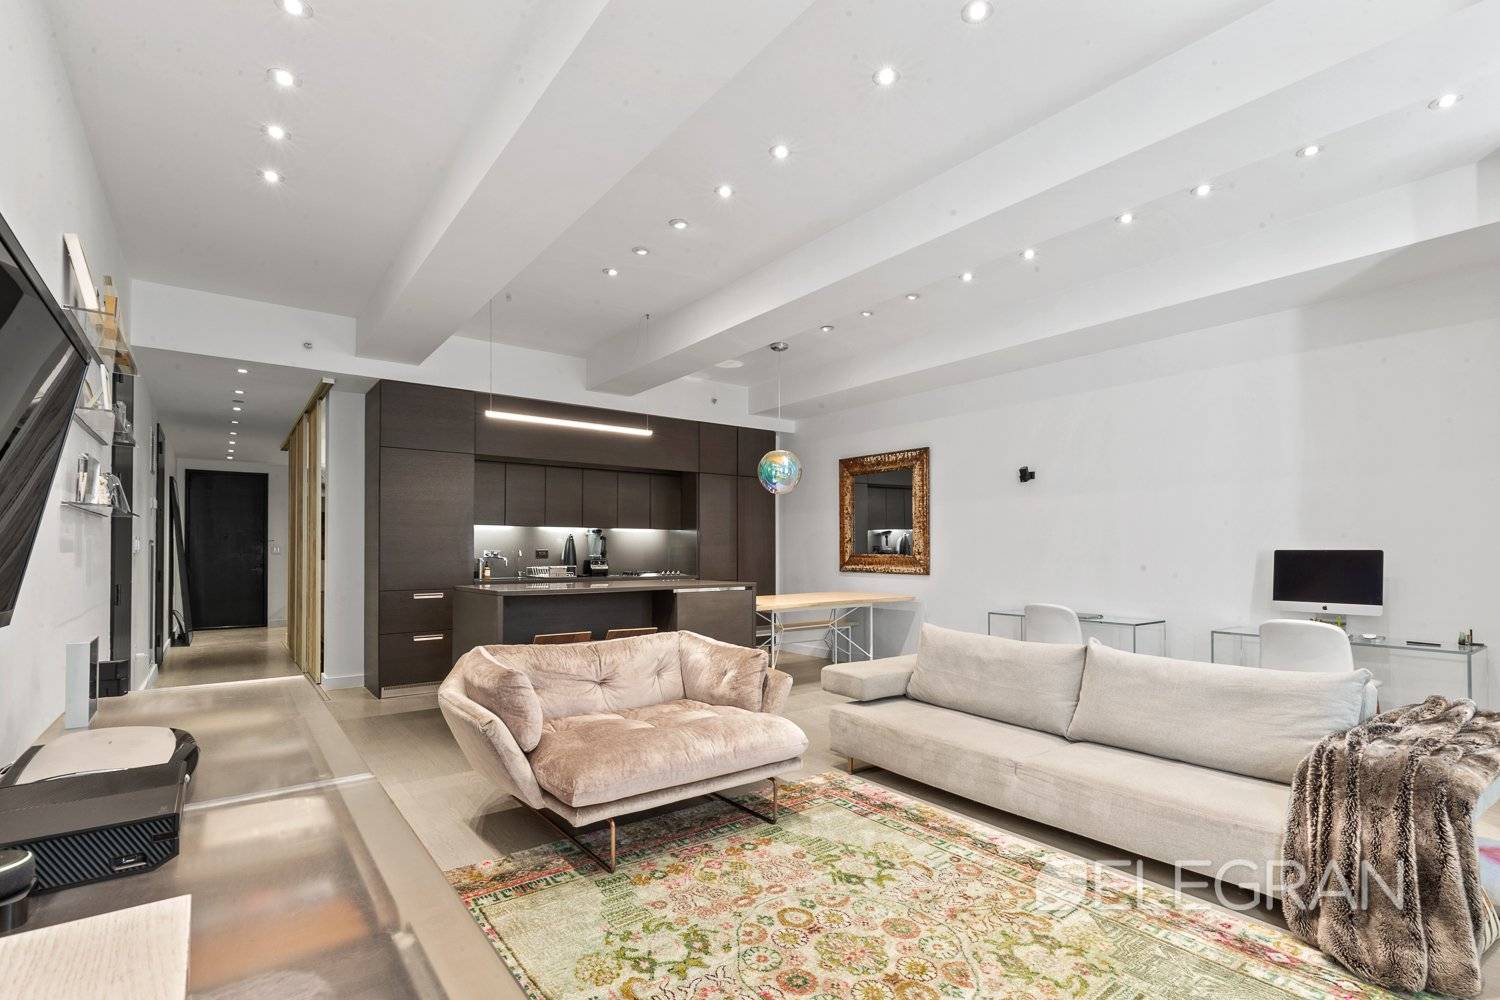 Luxury loft living reimagined at 20 Pine street Armani Casa designed condominiums.